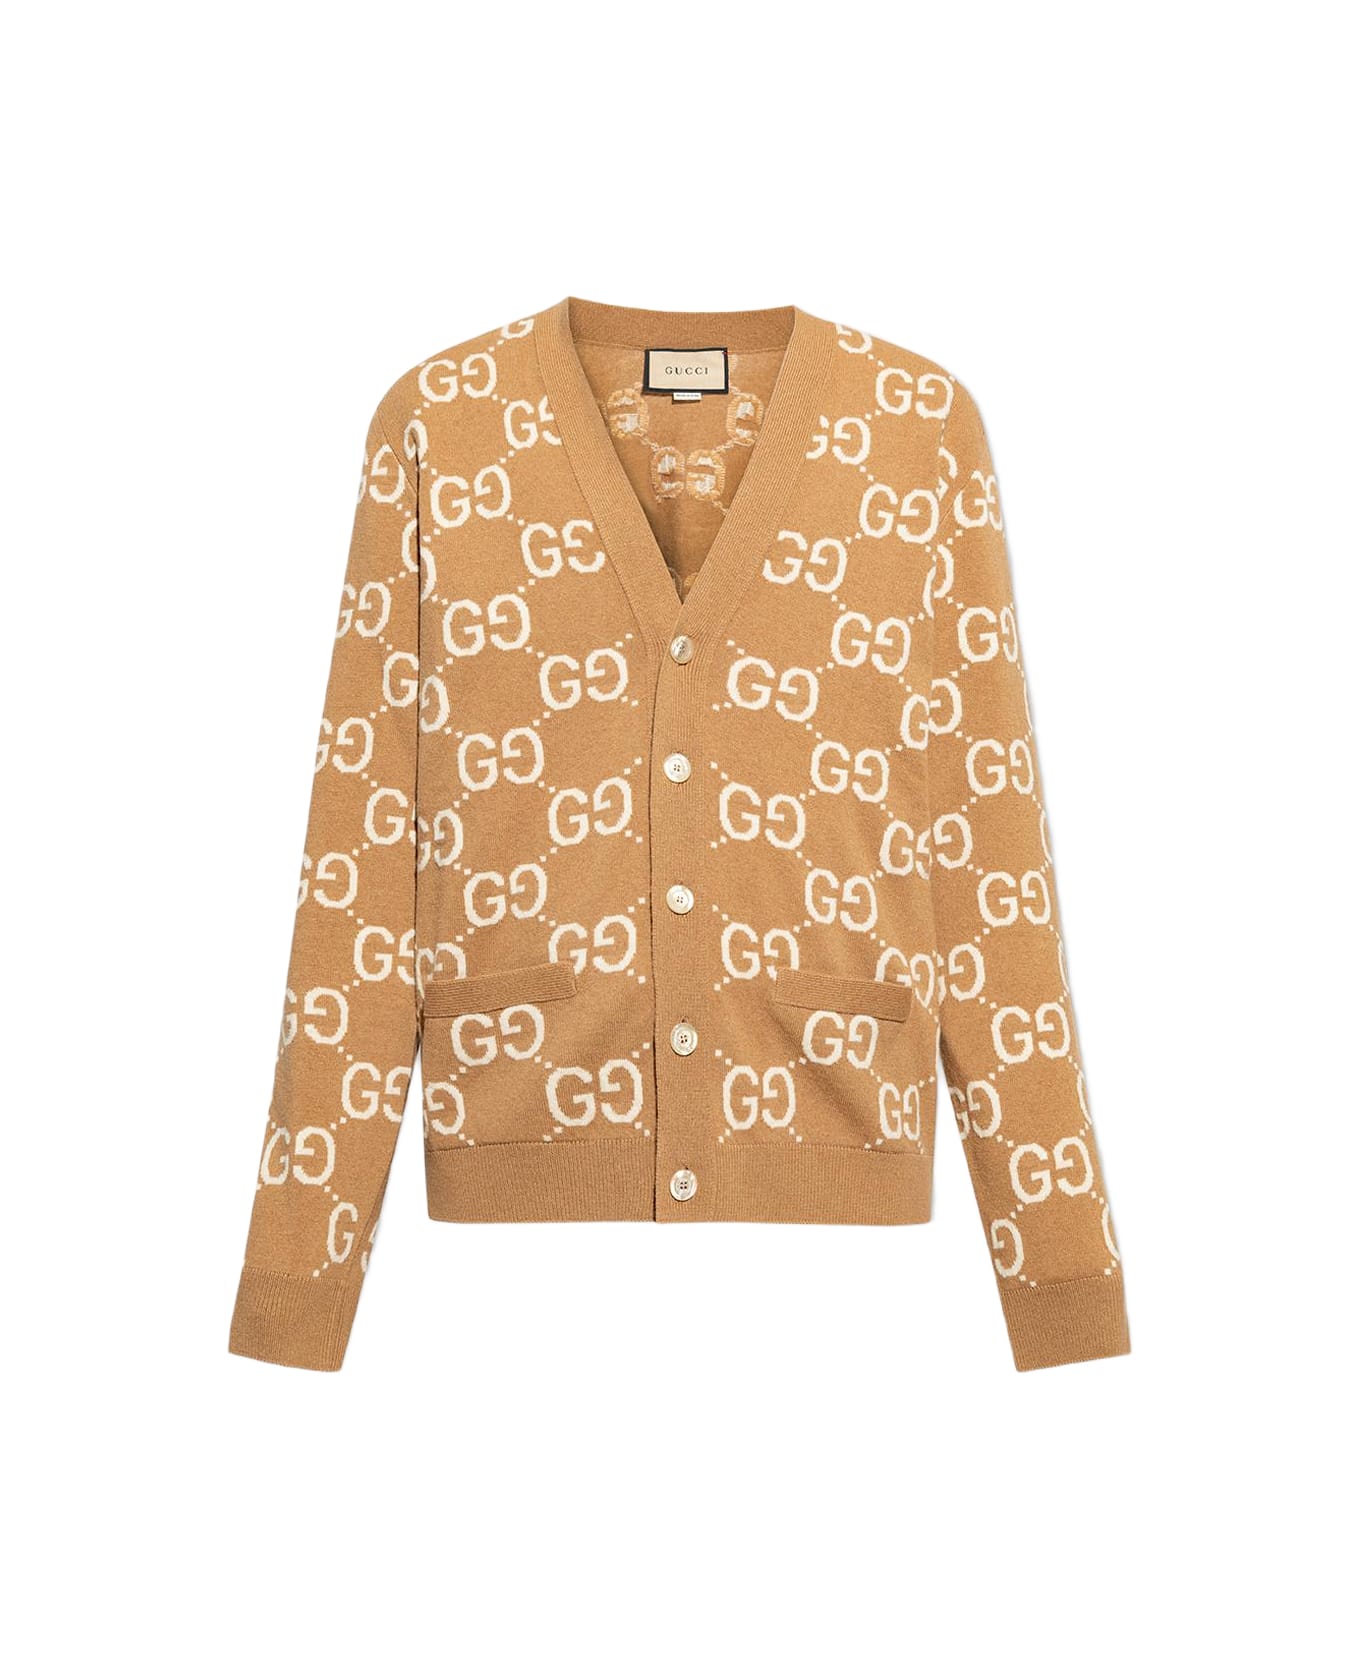 Gucci Wool Cardigan With Monogram - Camel カーディガン